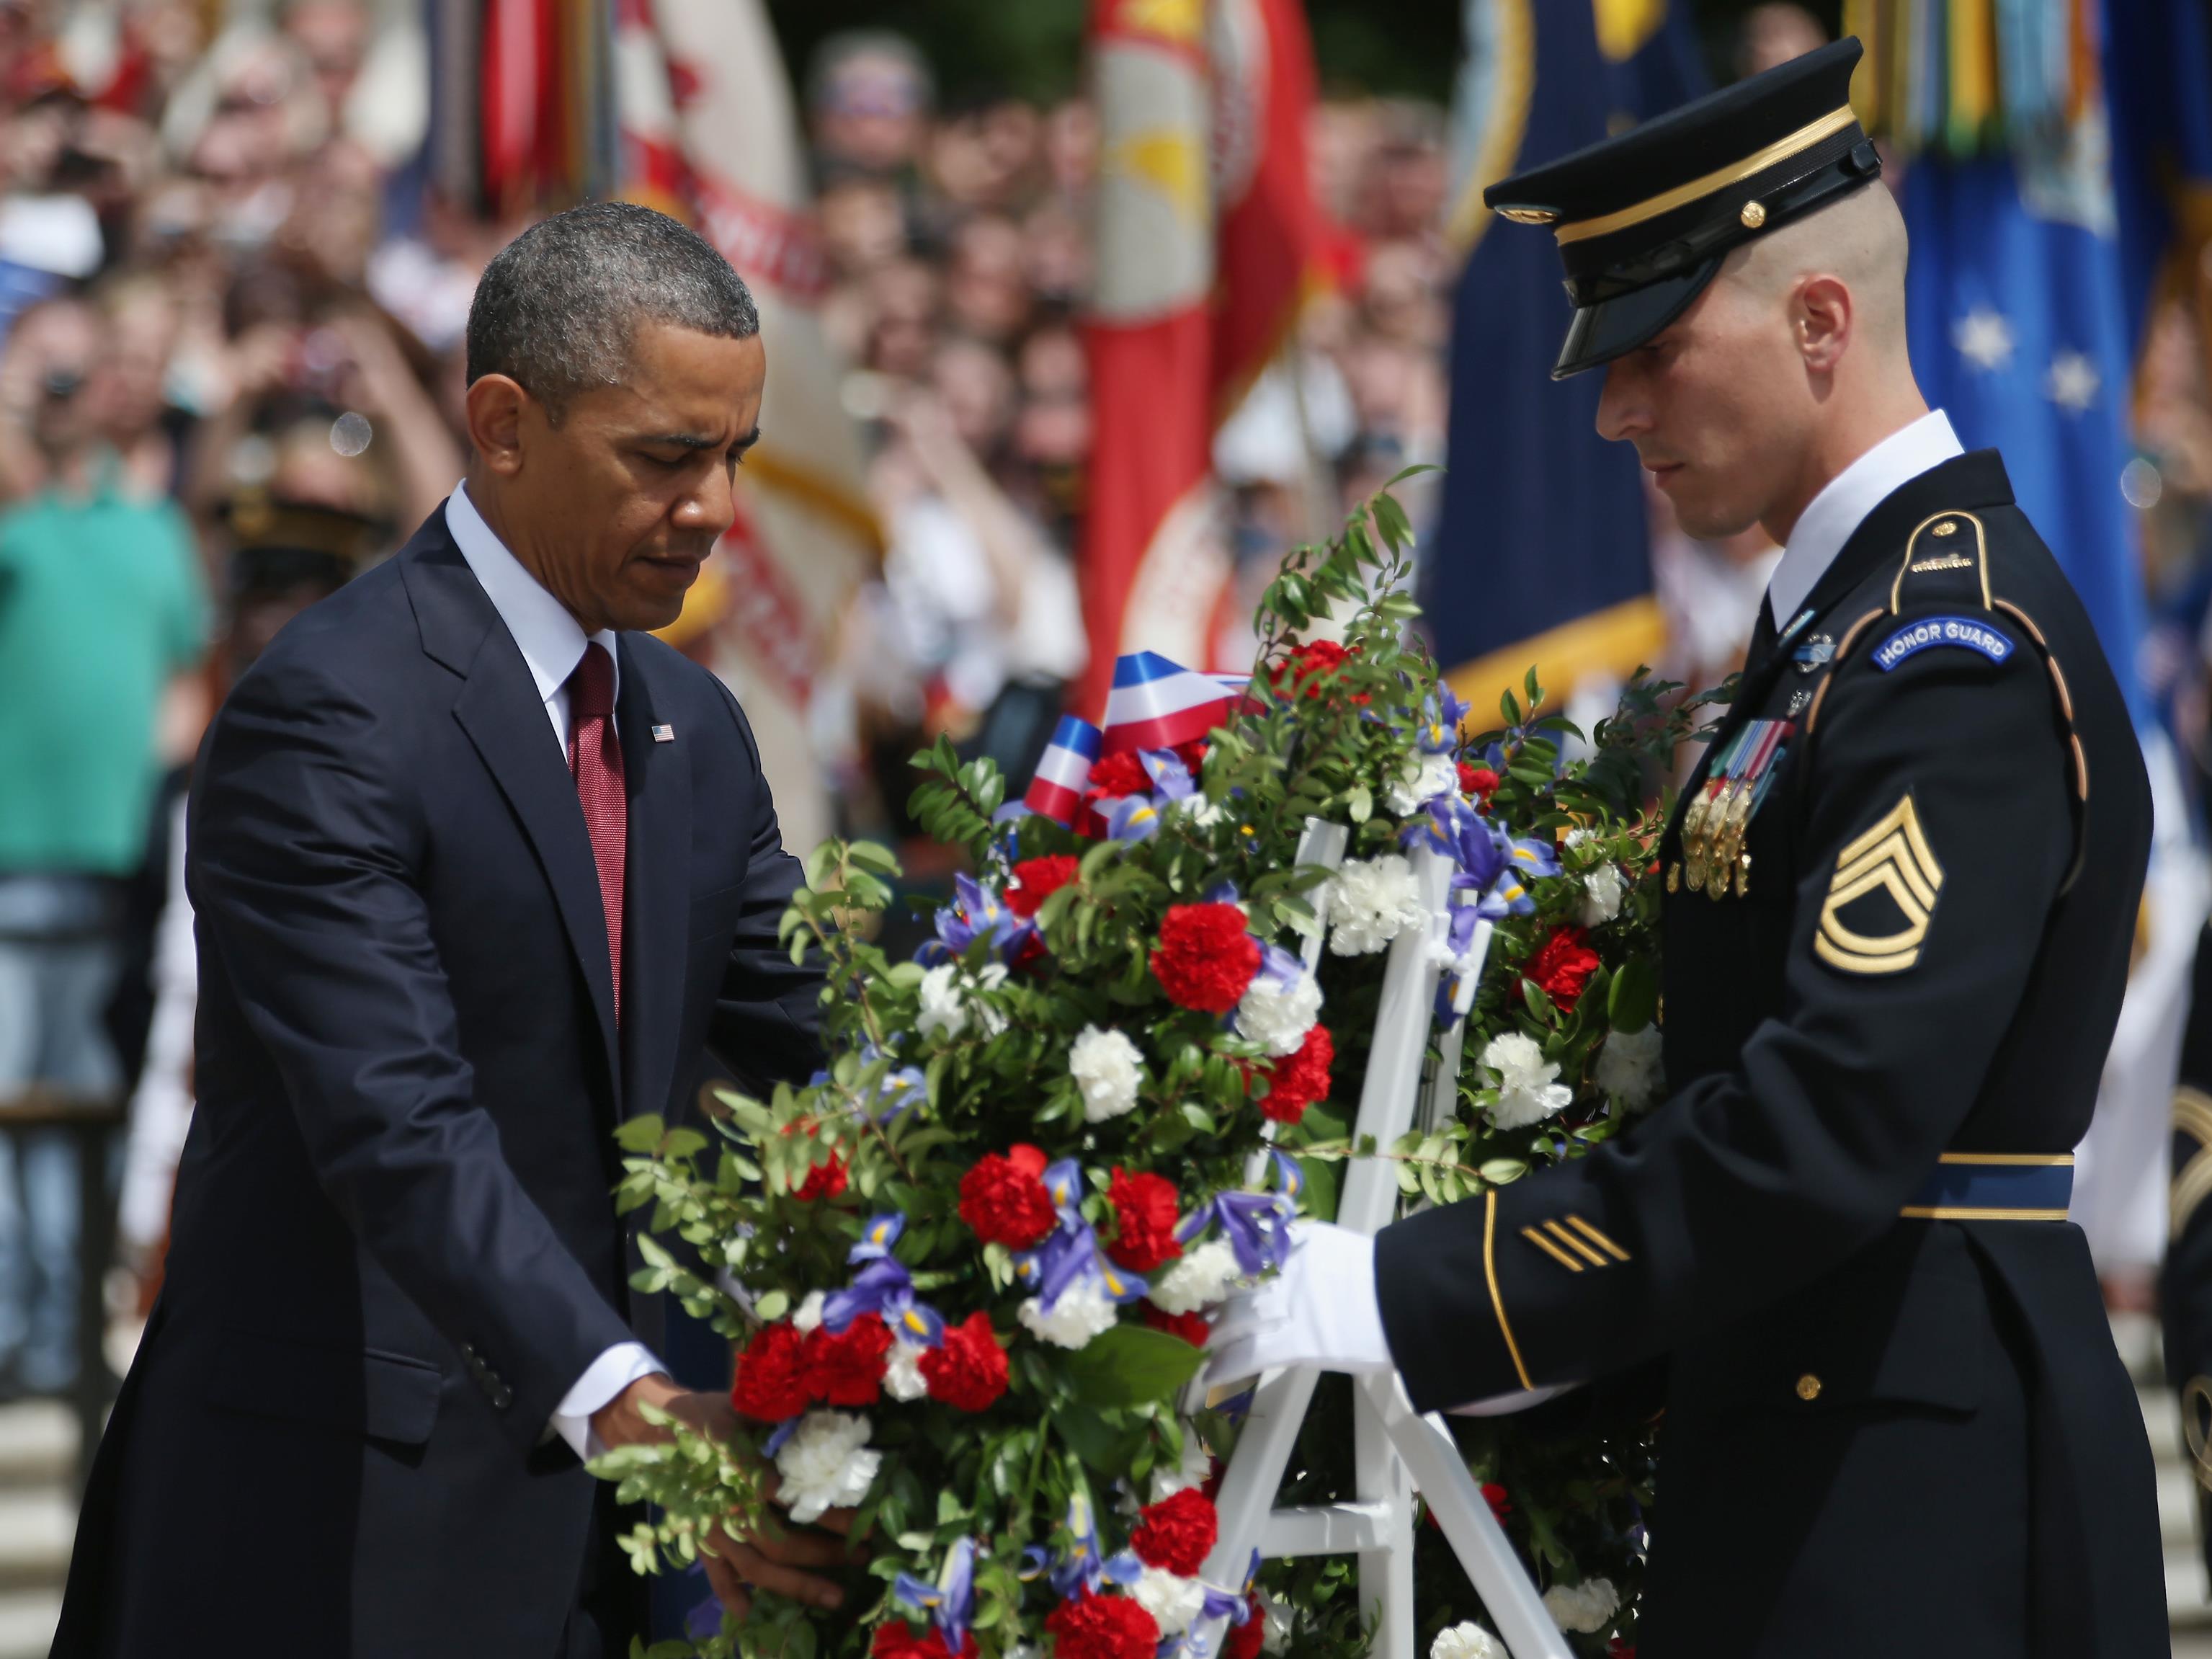 Remarks of then-President Barack Obama at Arlington, Memorial Day